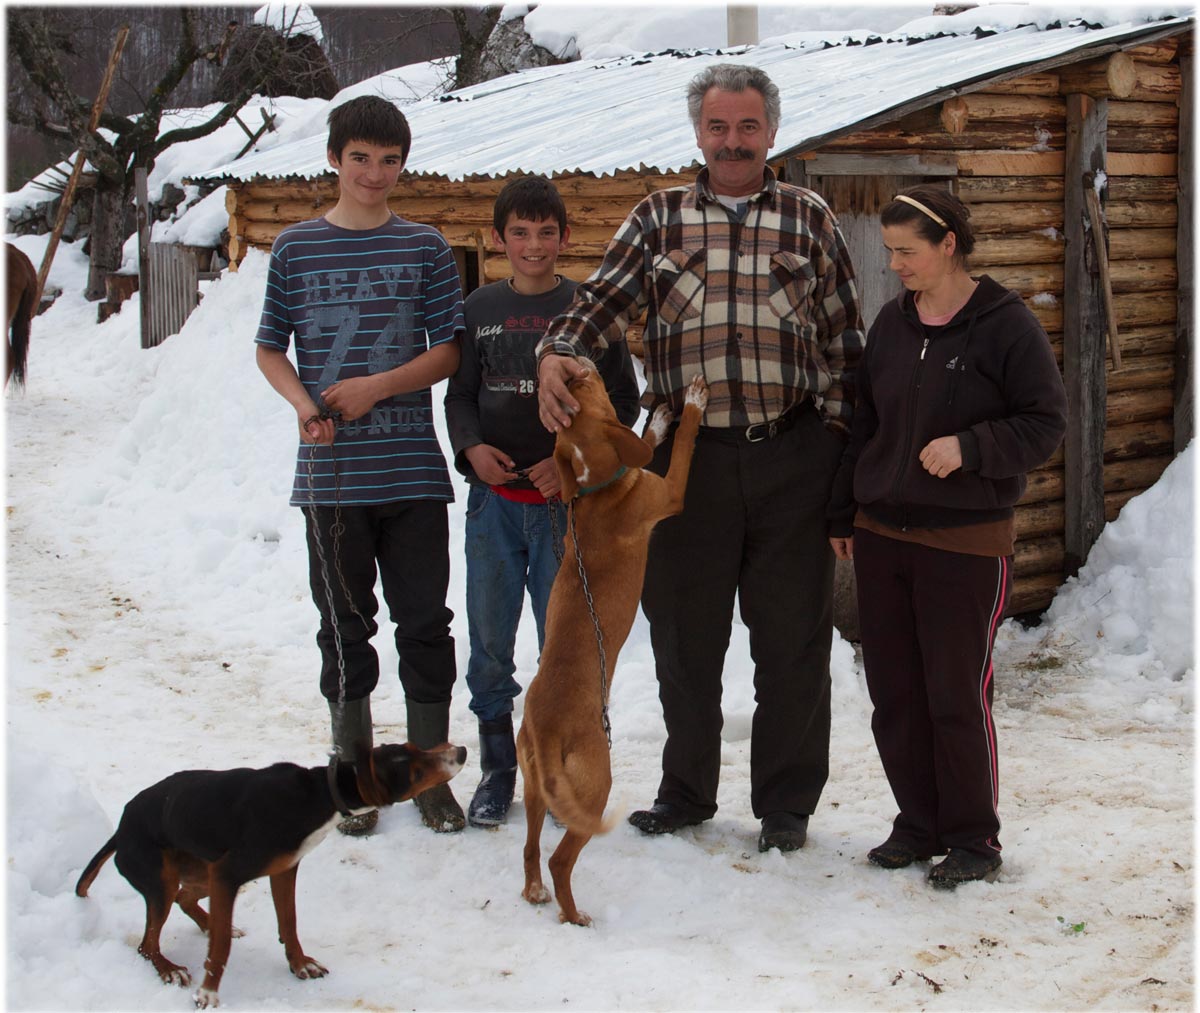 locals authentic skiing albania outdoor visit fresh powder snow holiday travel tour trekking ski-touring